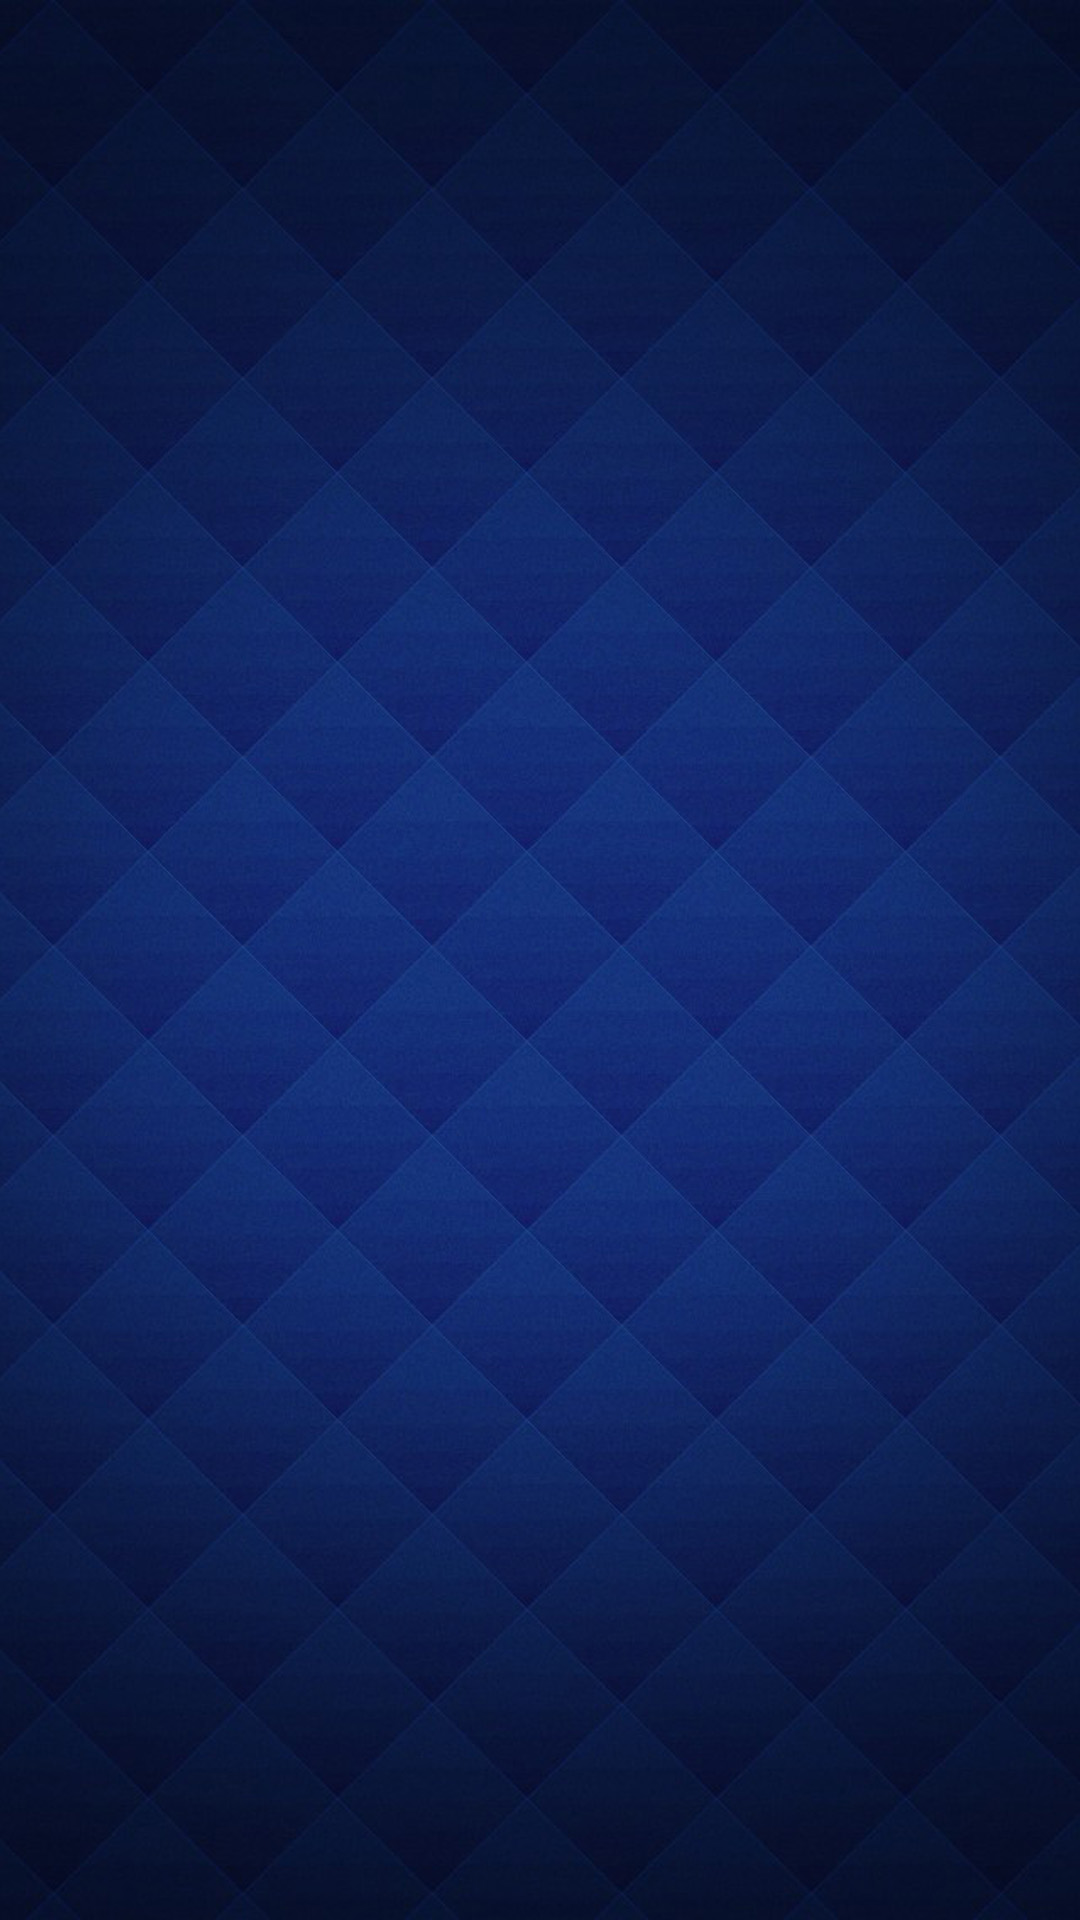 Blue Iphone Wallpapers Pixelstalk Net